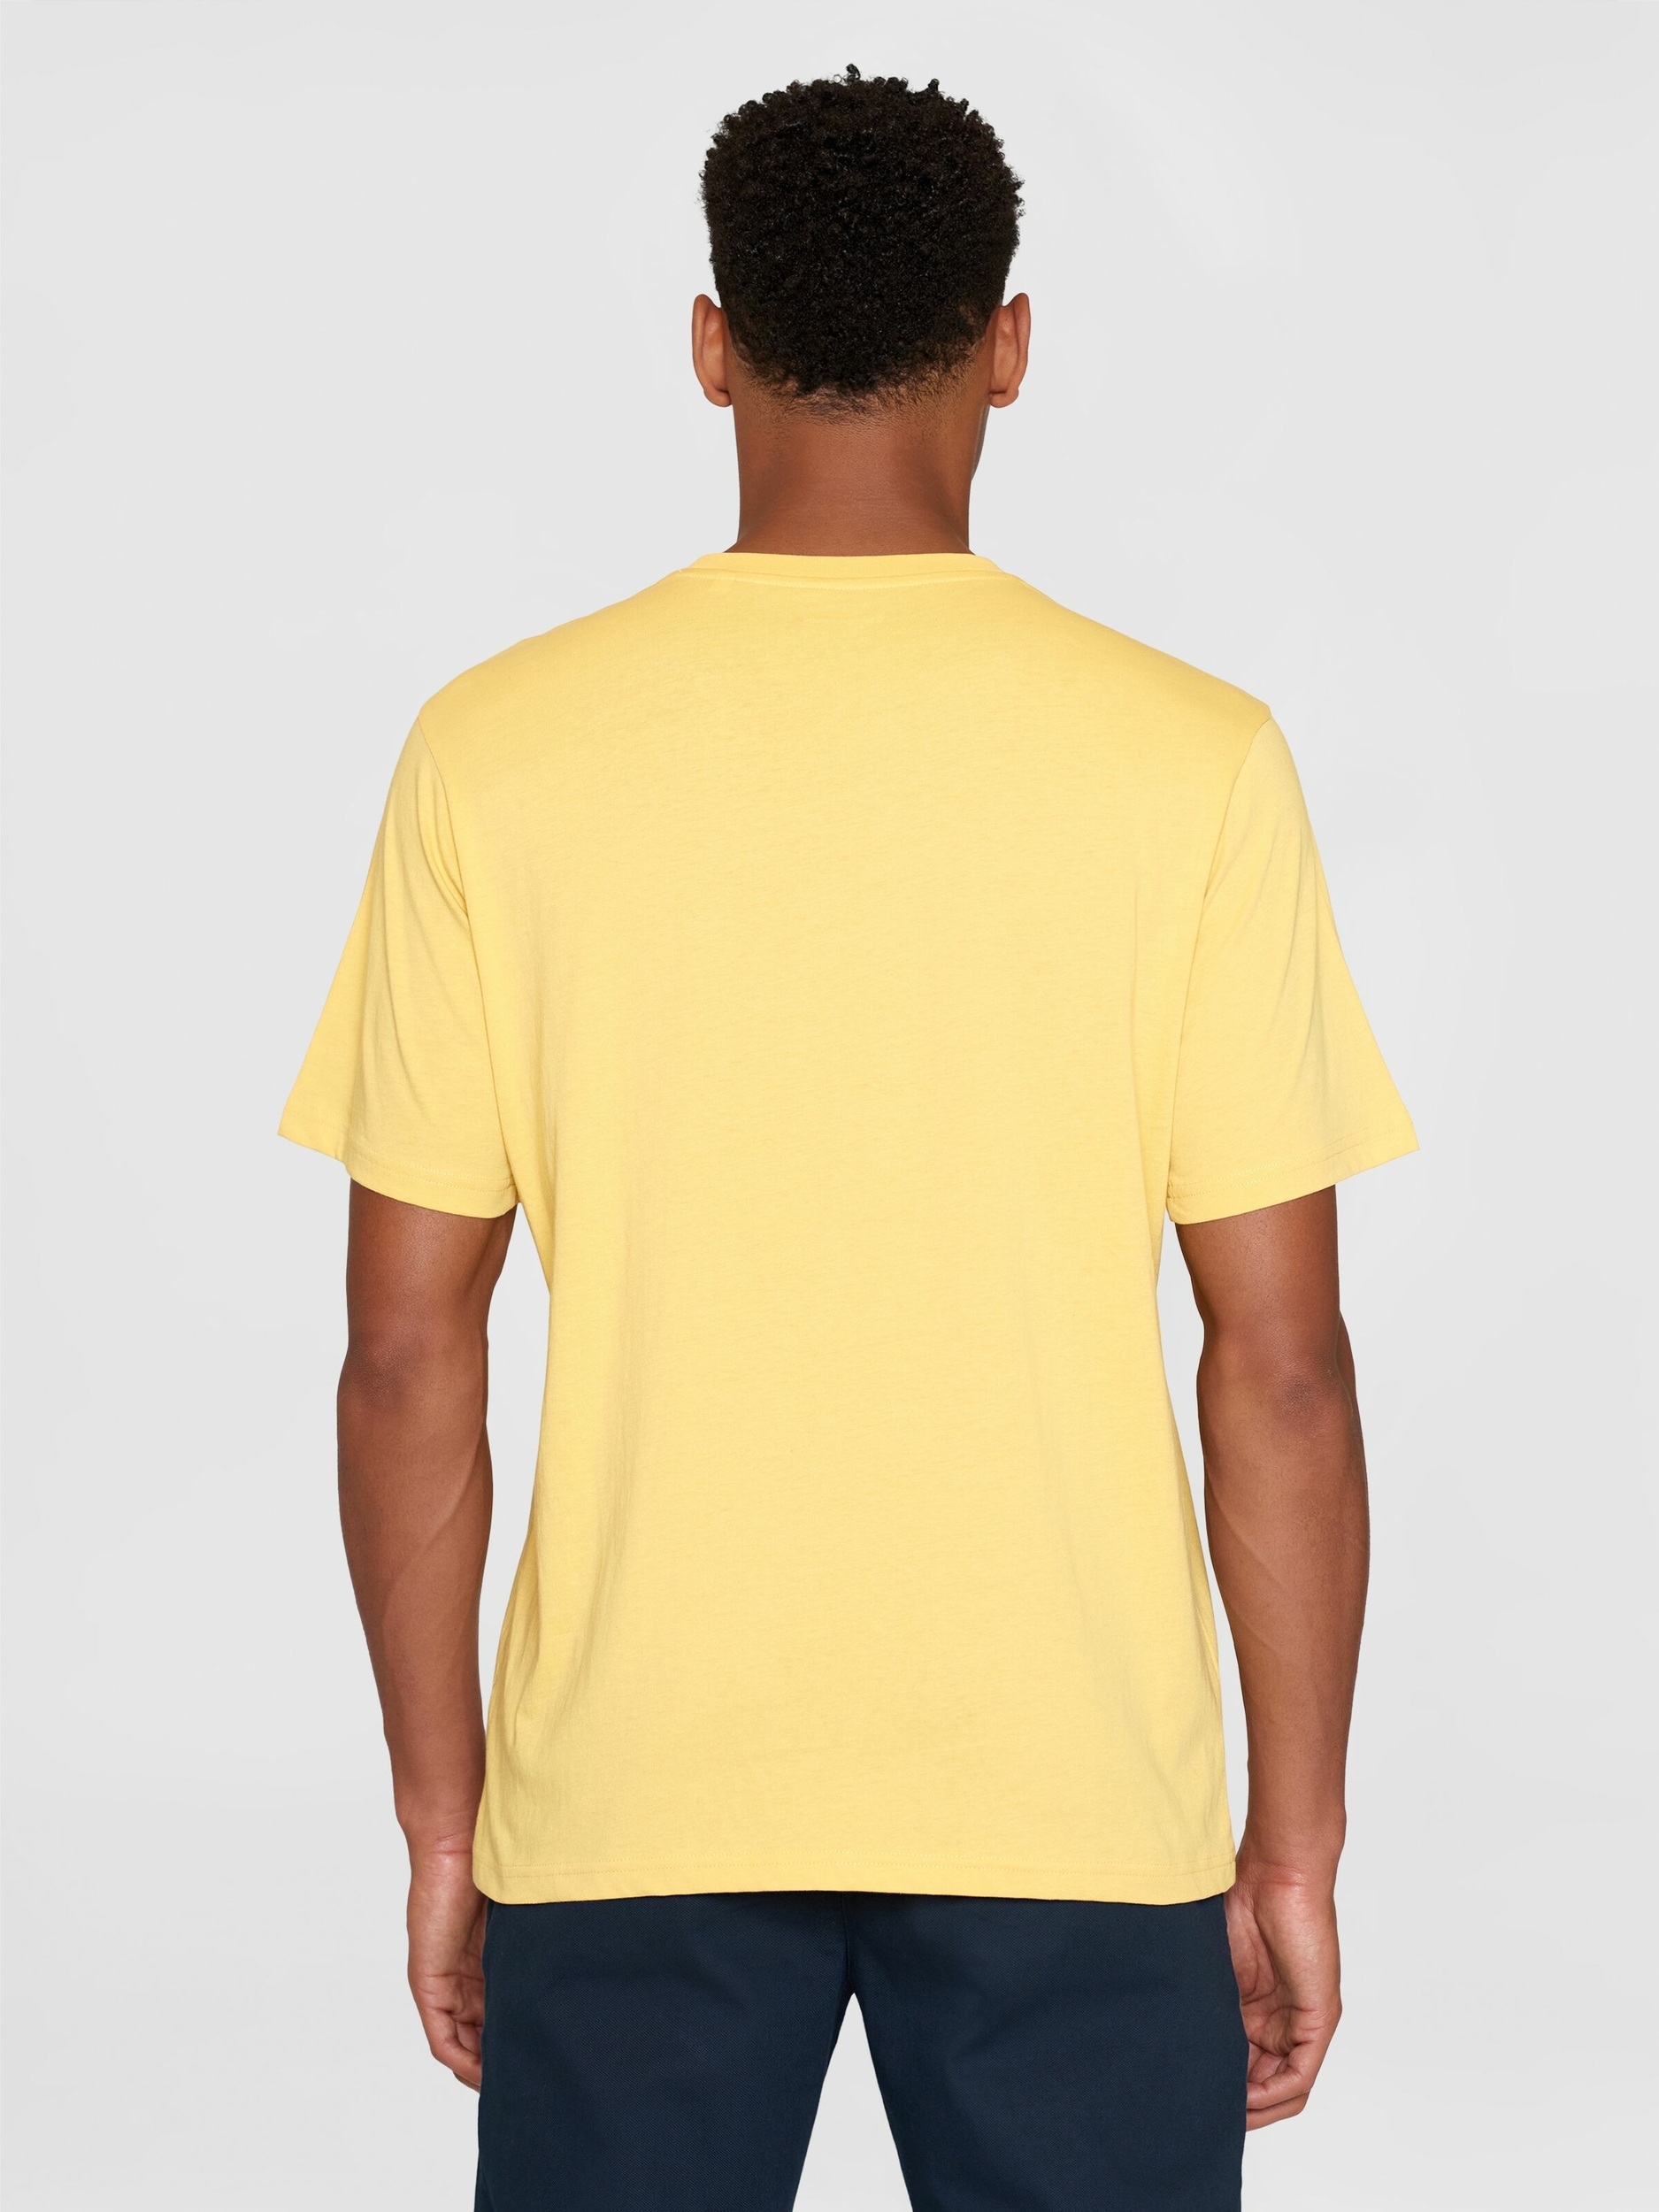 T-shirt Grand Hibou - misted yellow - coton biologique - Knowledge Cotton Apparel 03